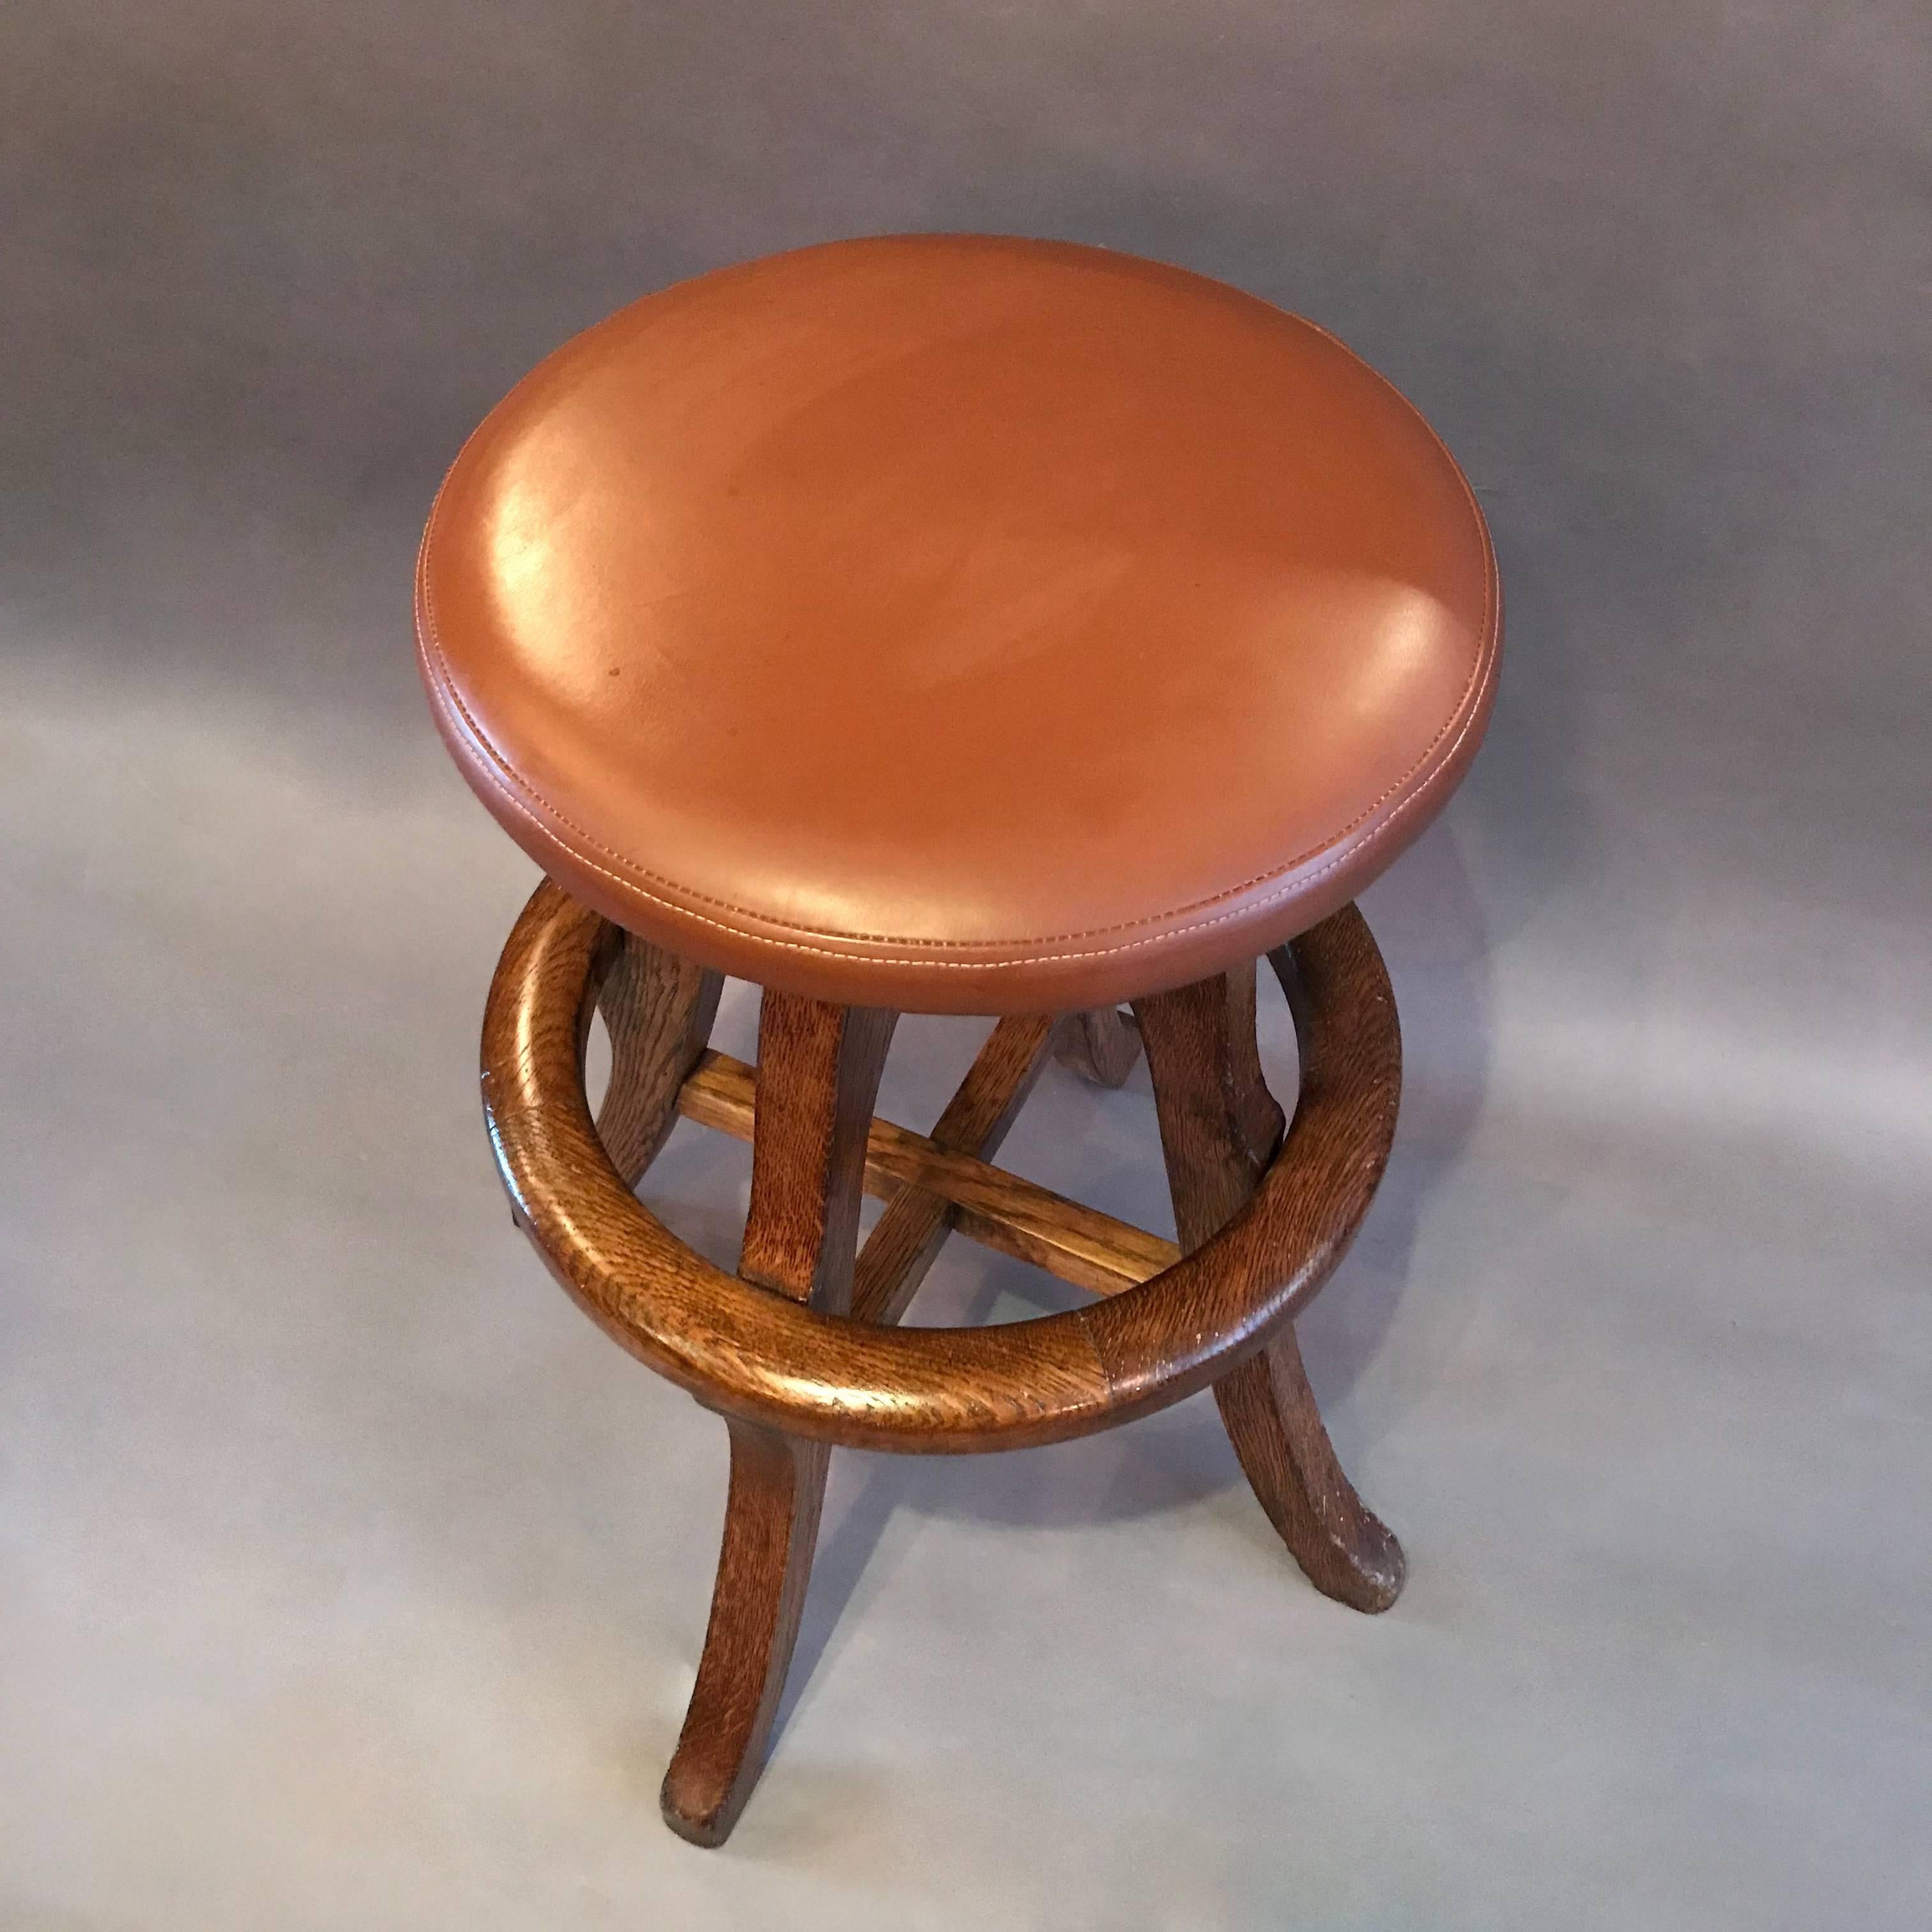 work shop stools